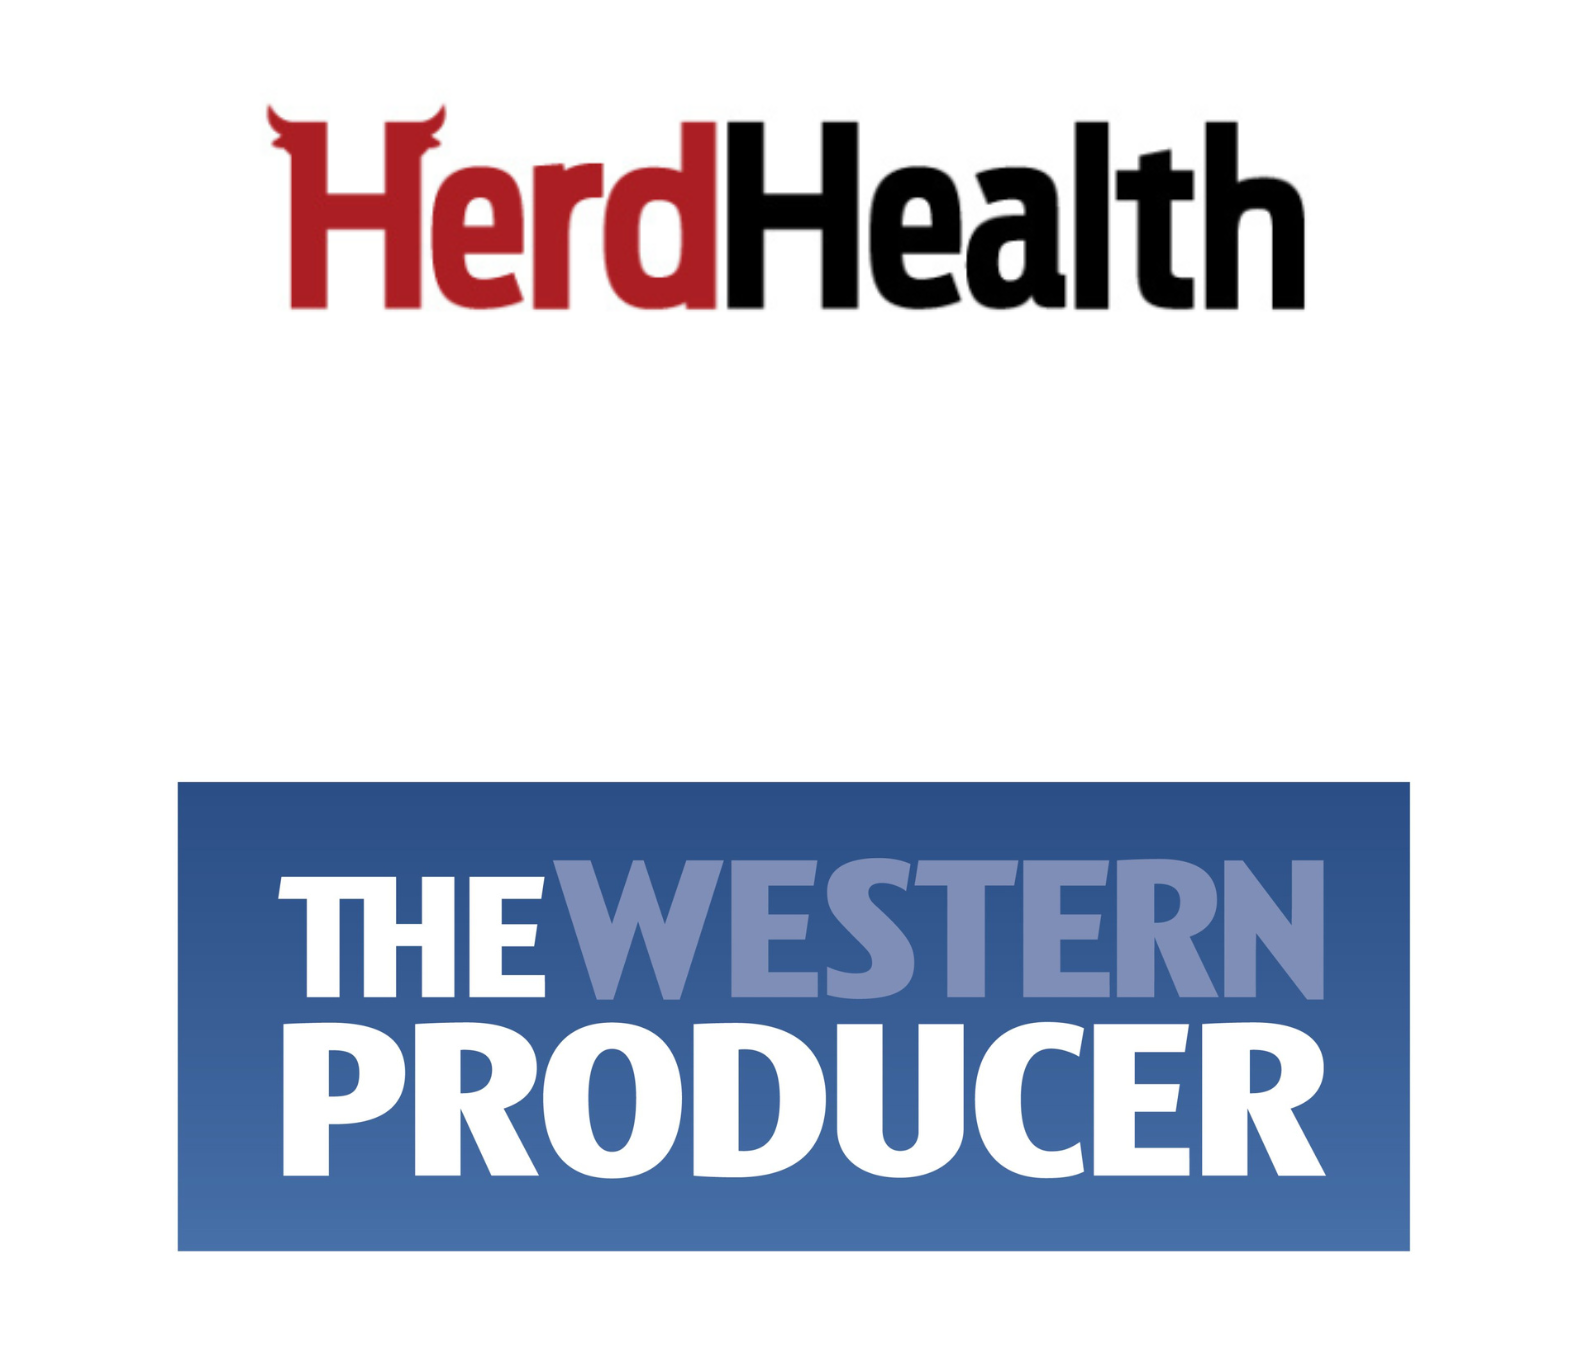 Herd Health & Western Producer